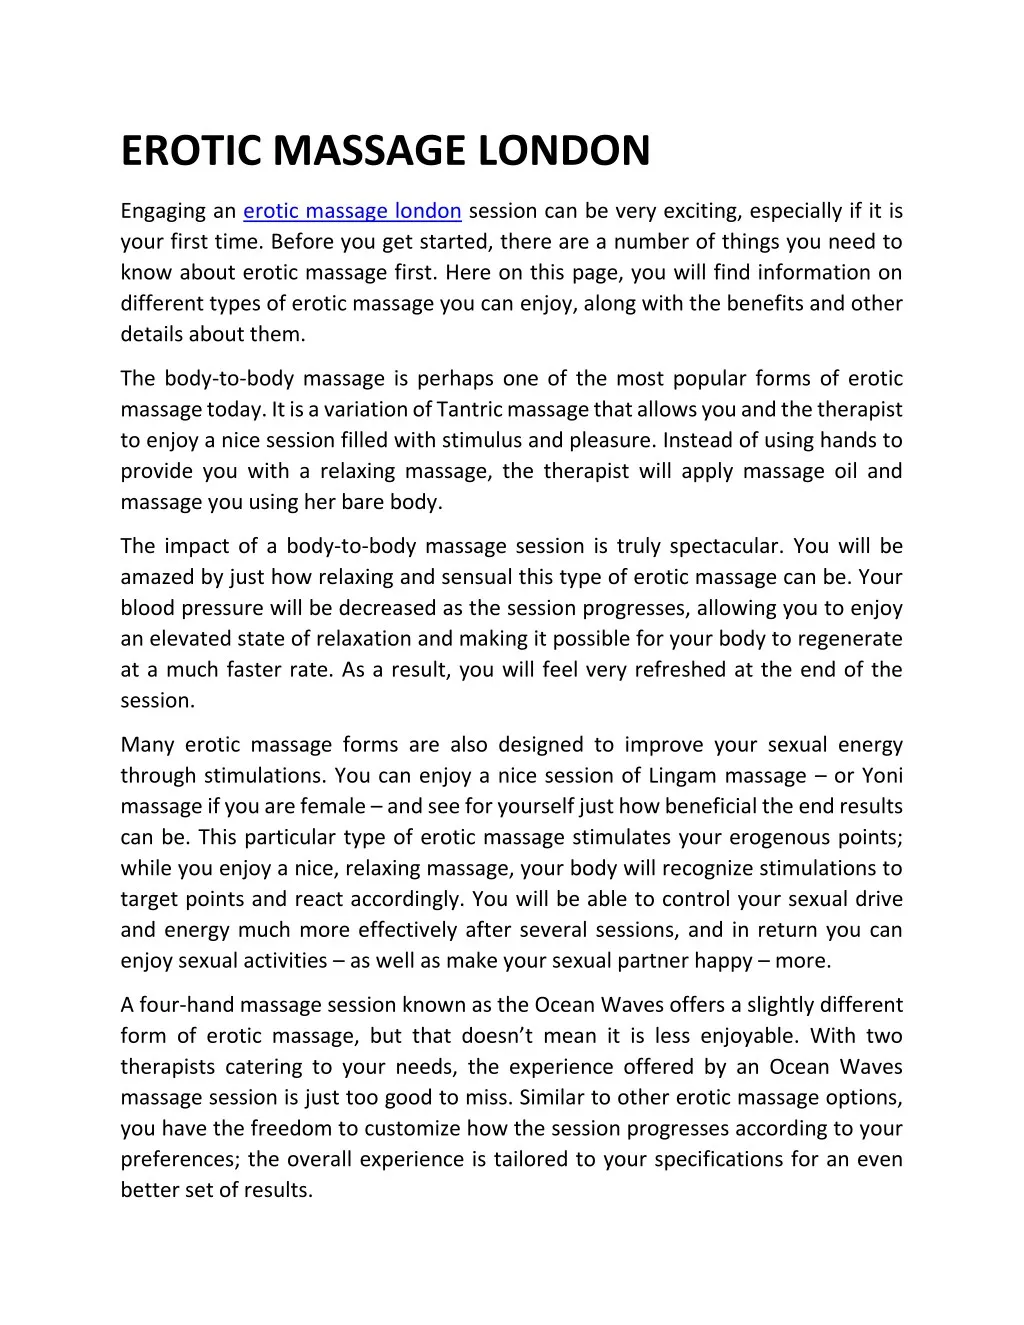 erotic massage london